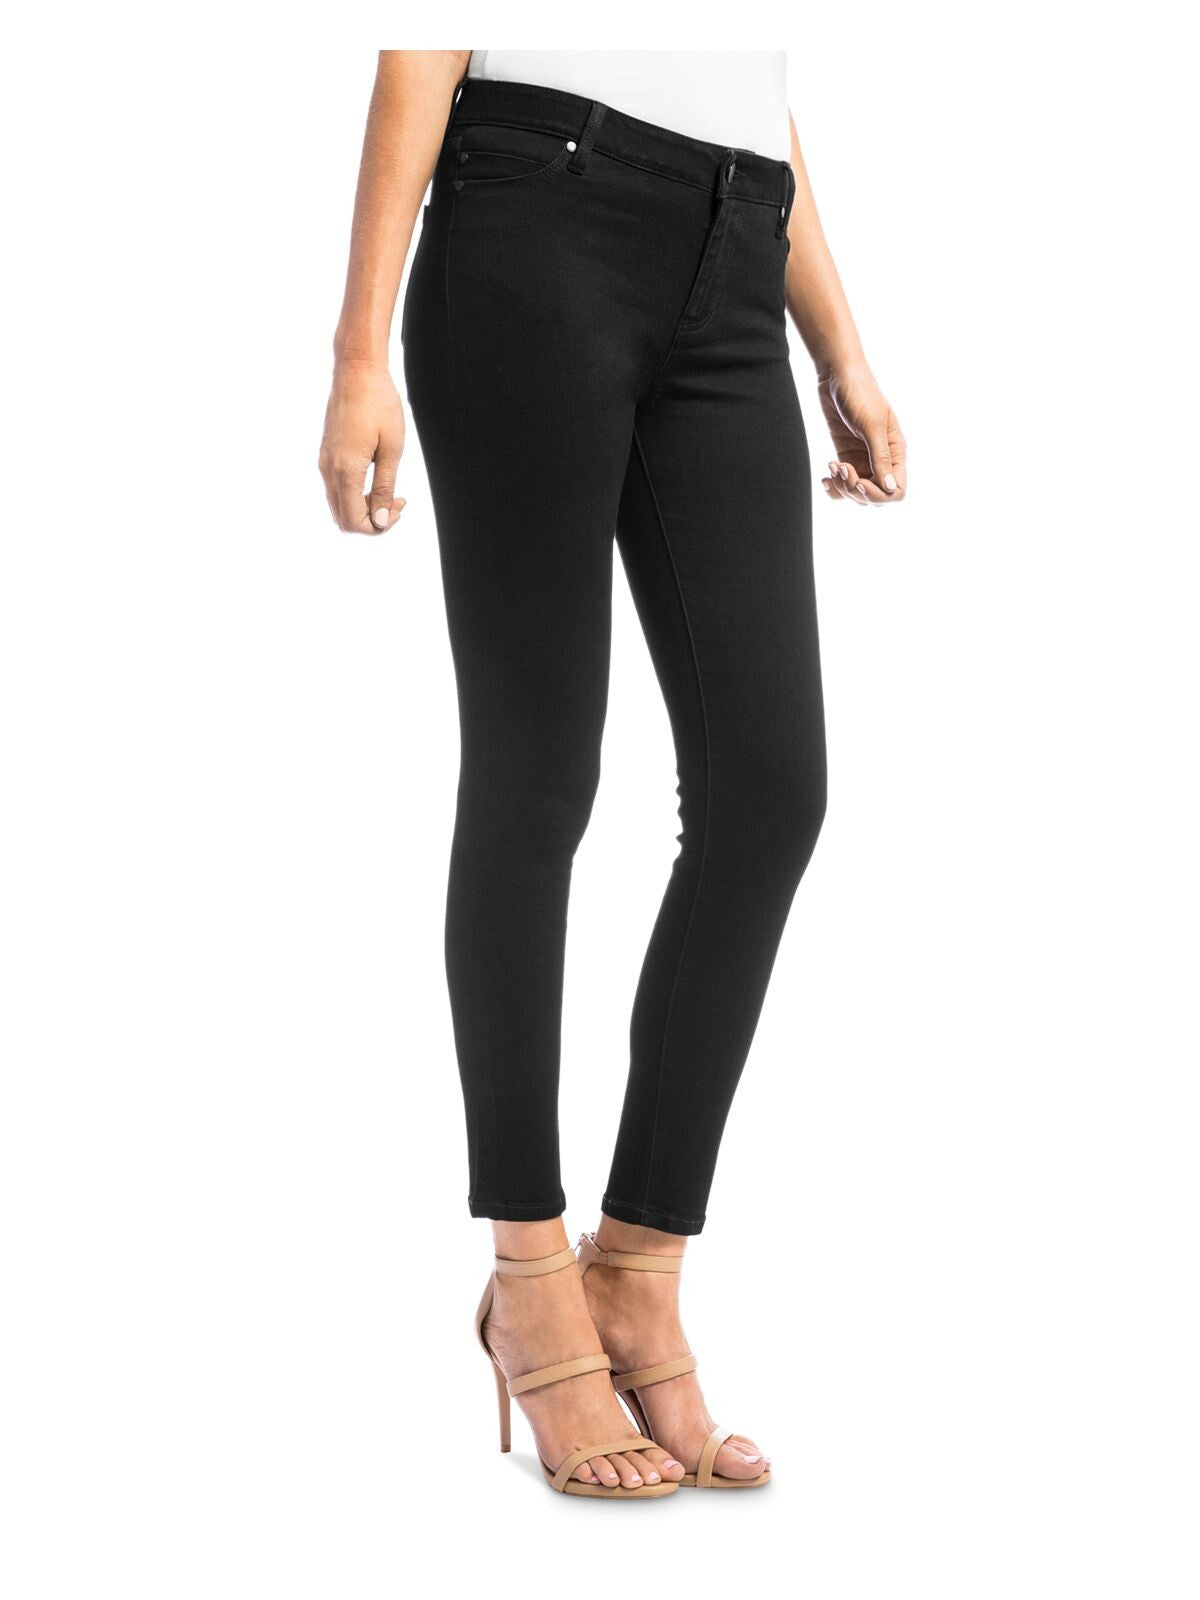 LIVERPOOL Womens Black Skinny Jeans 4\27